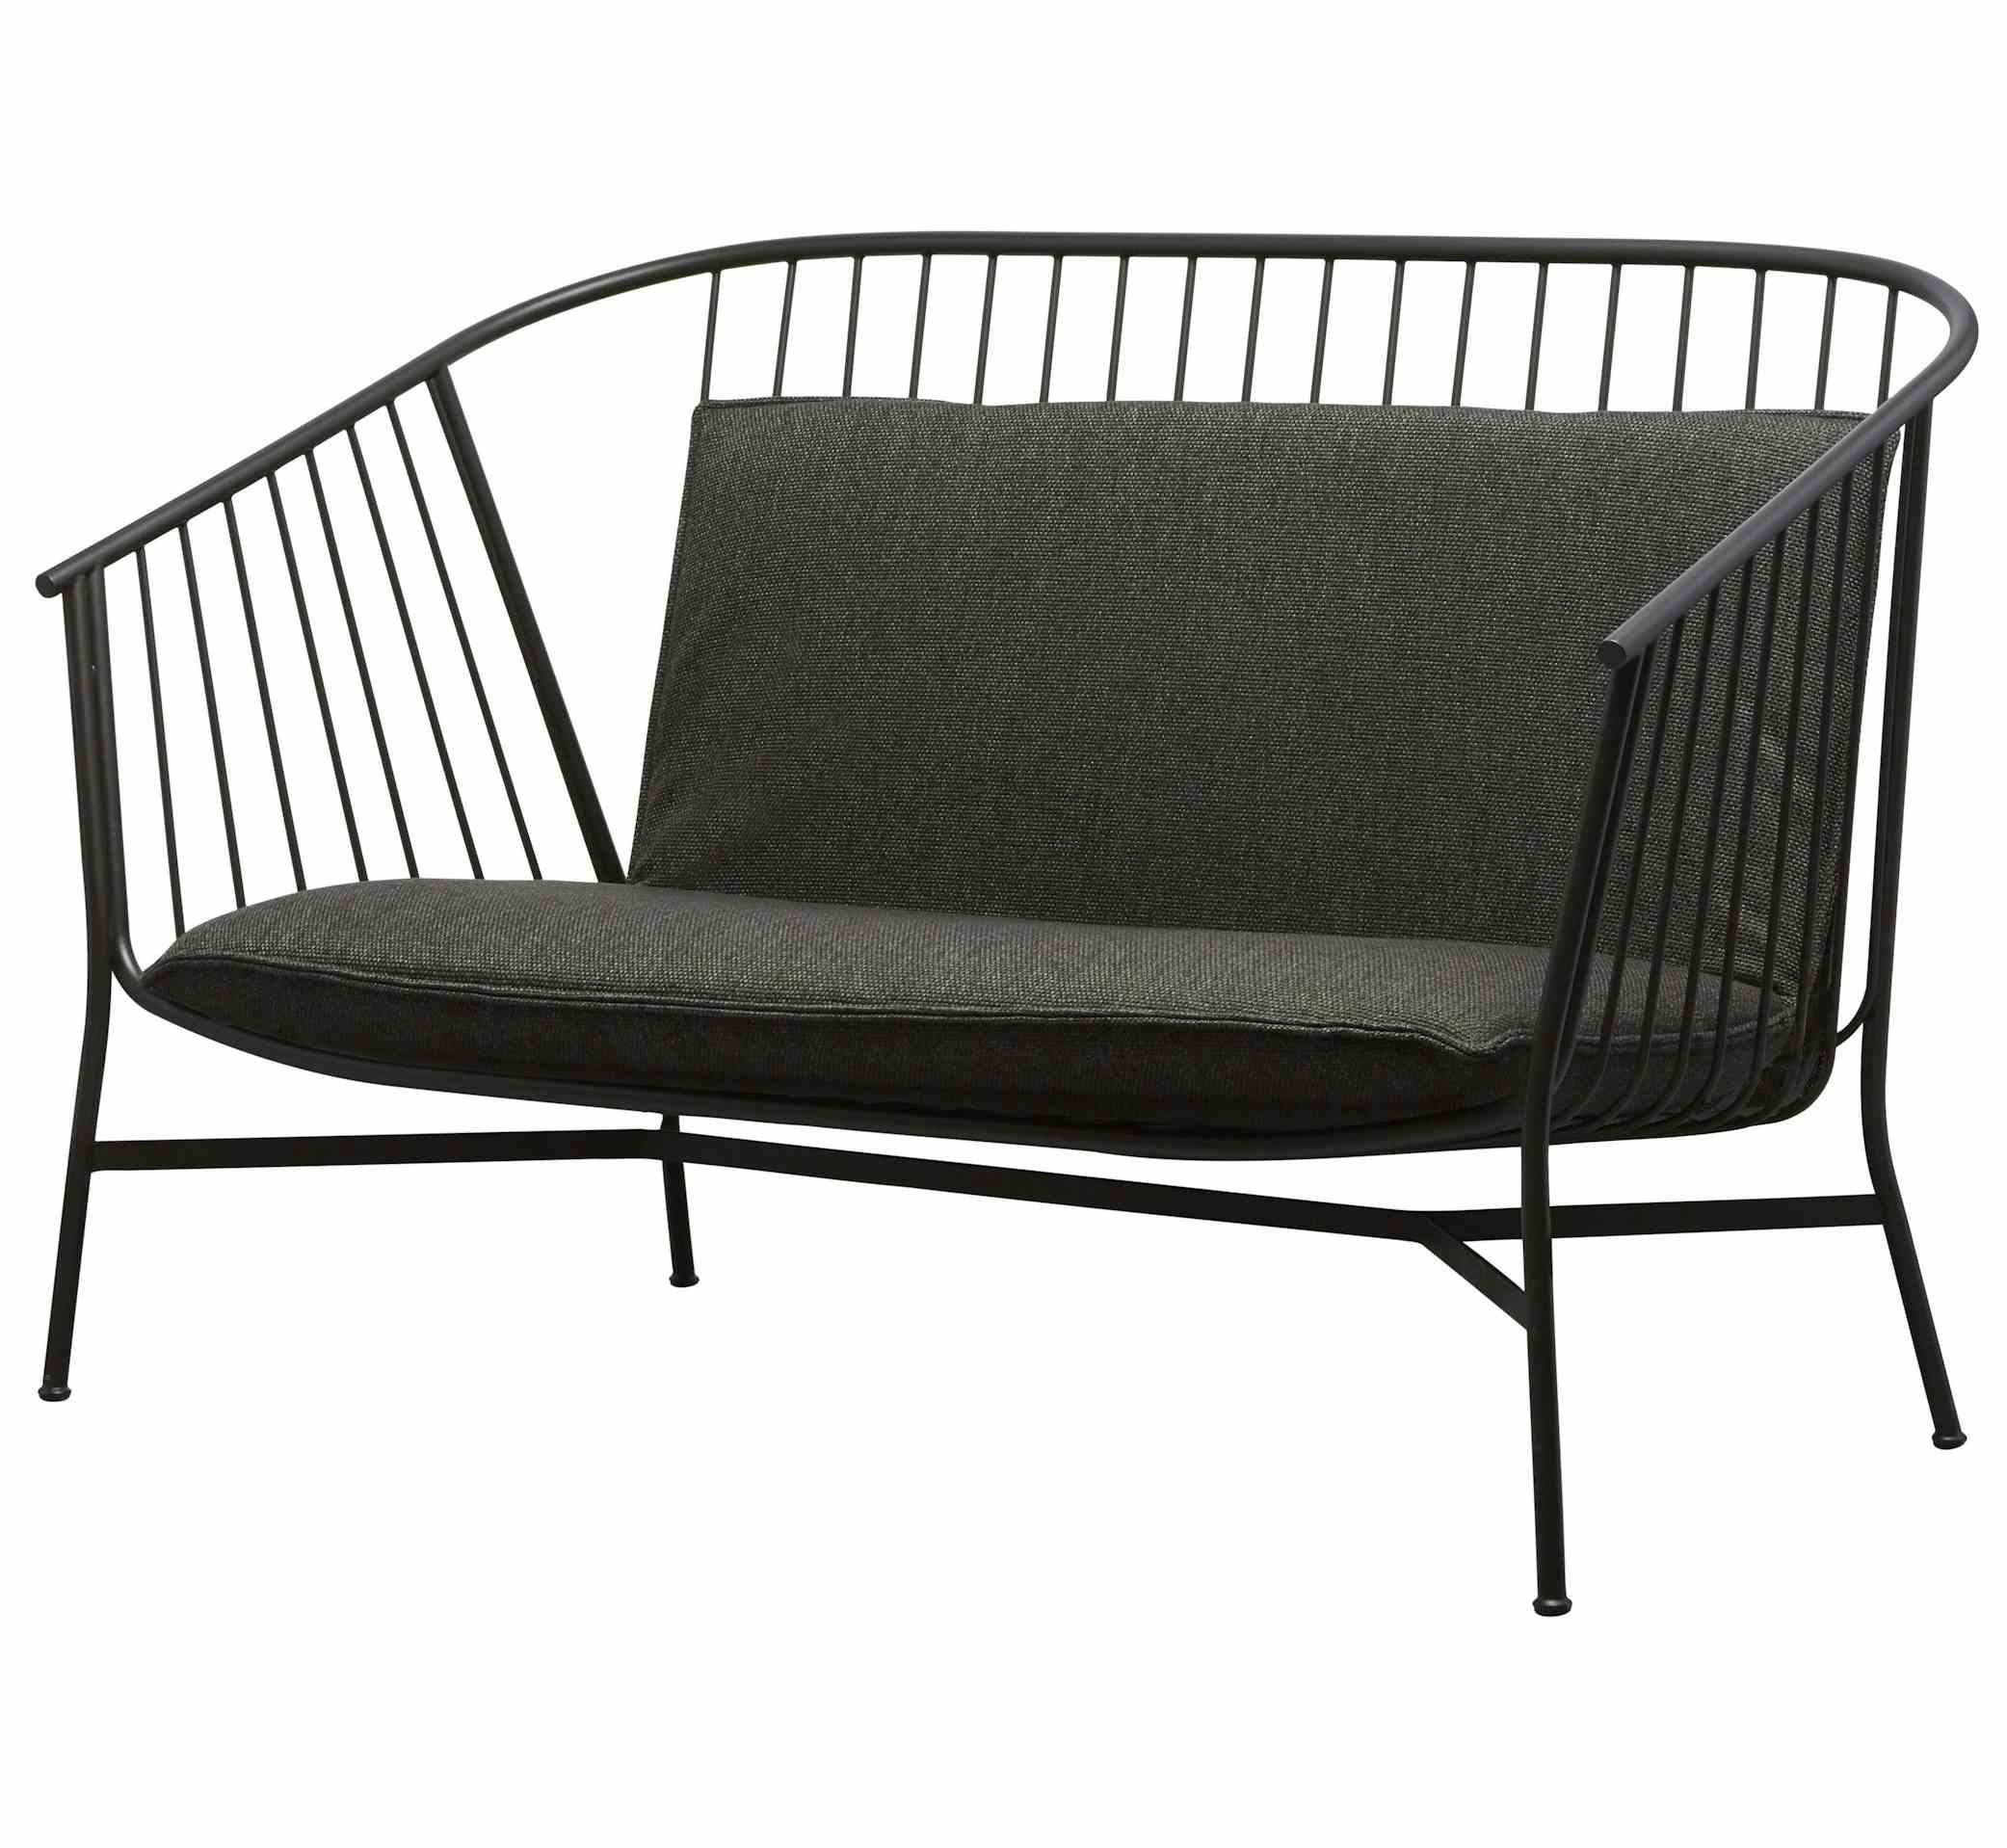 Sp01 design jeanette sofa angle haute living